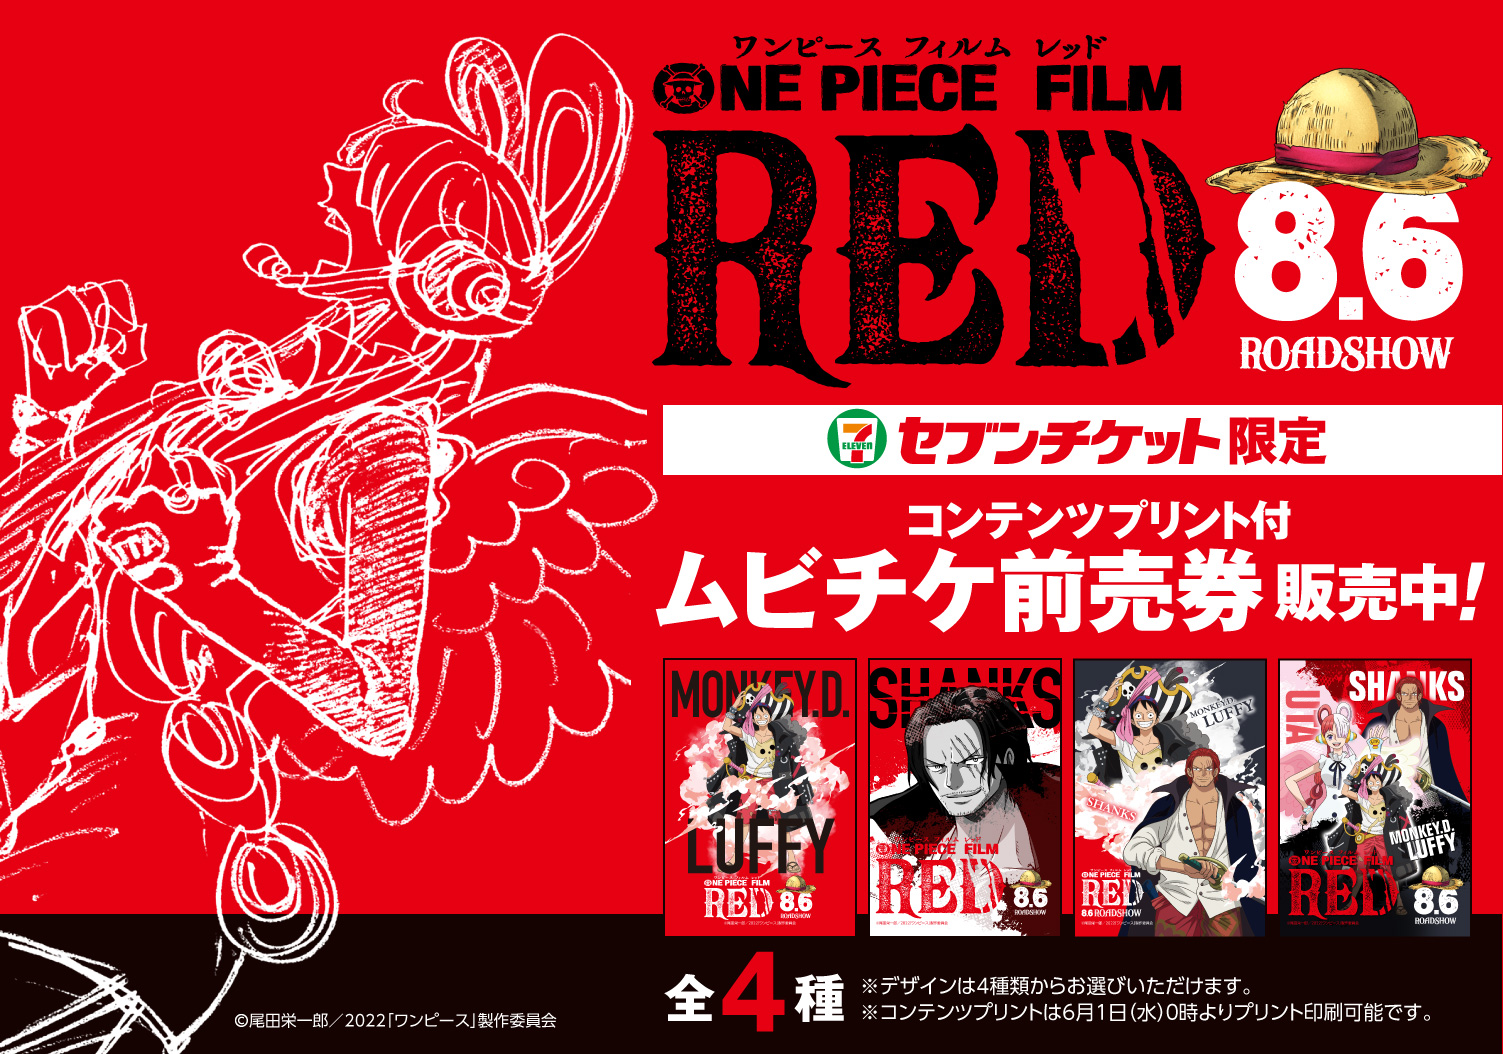 One Piece Film Red 公式 Op Filmred Twitter